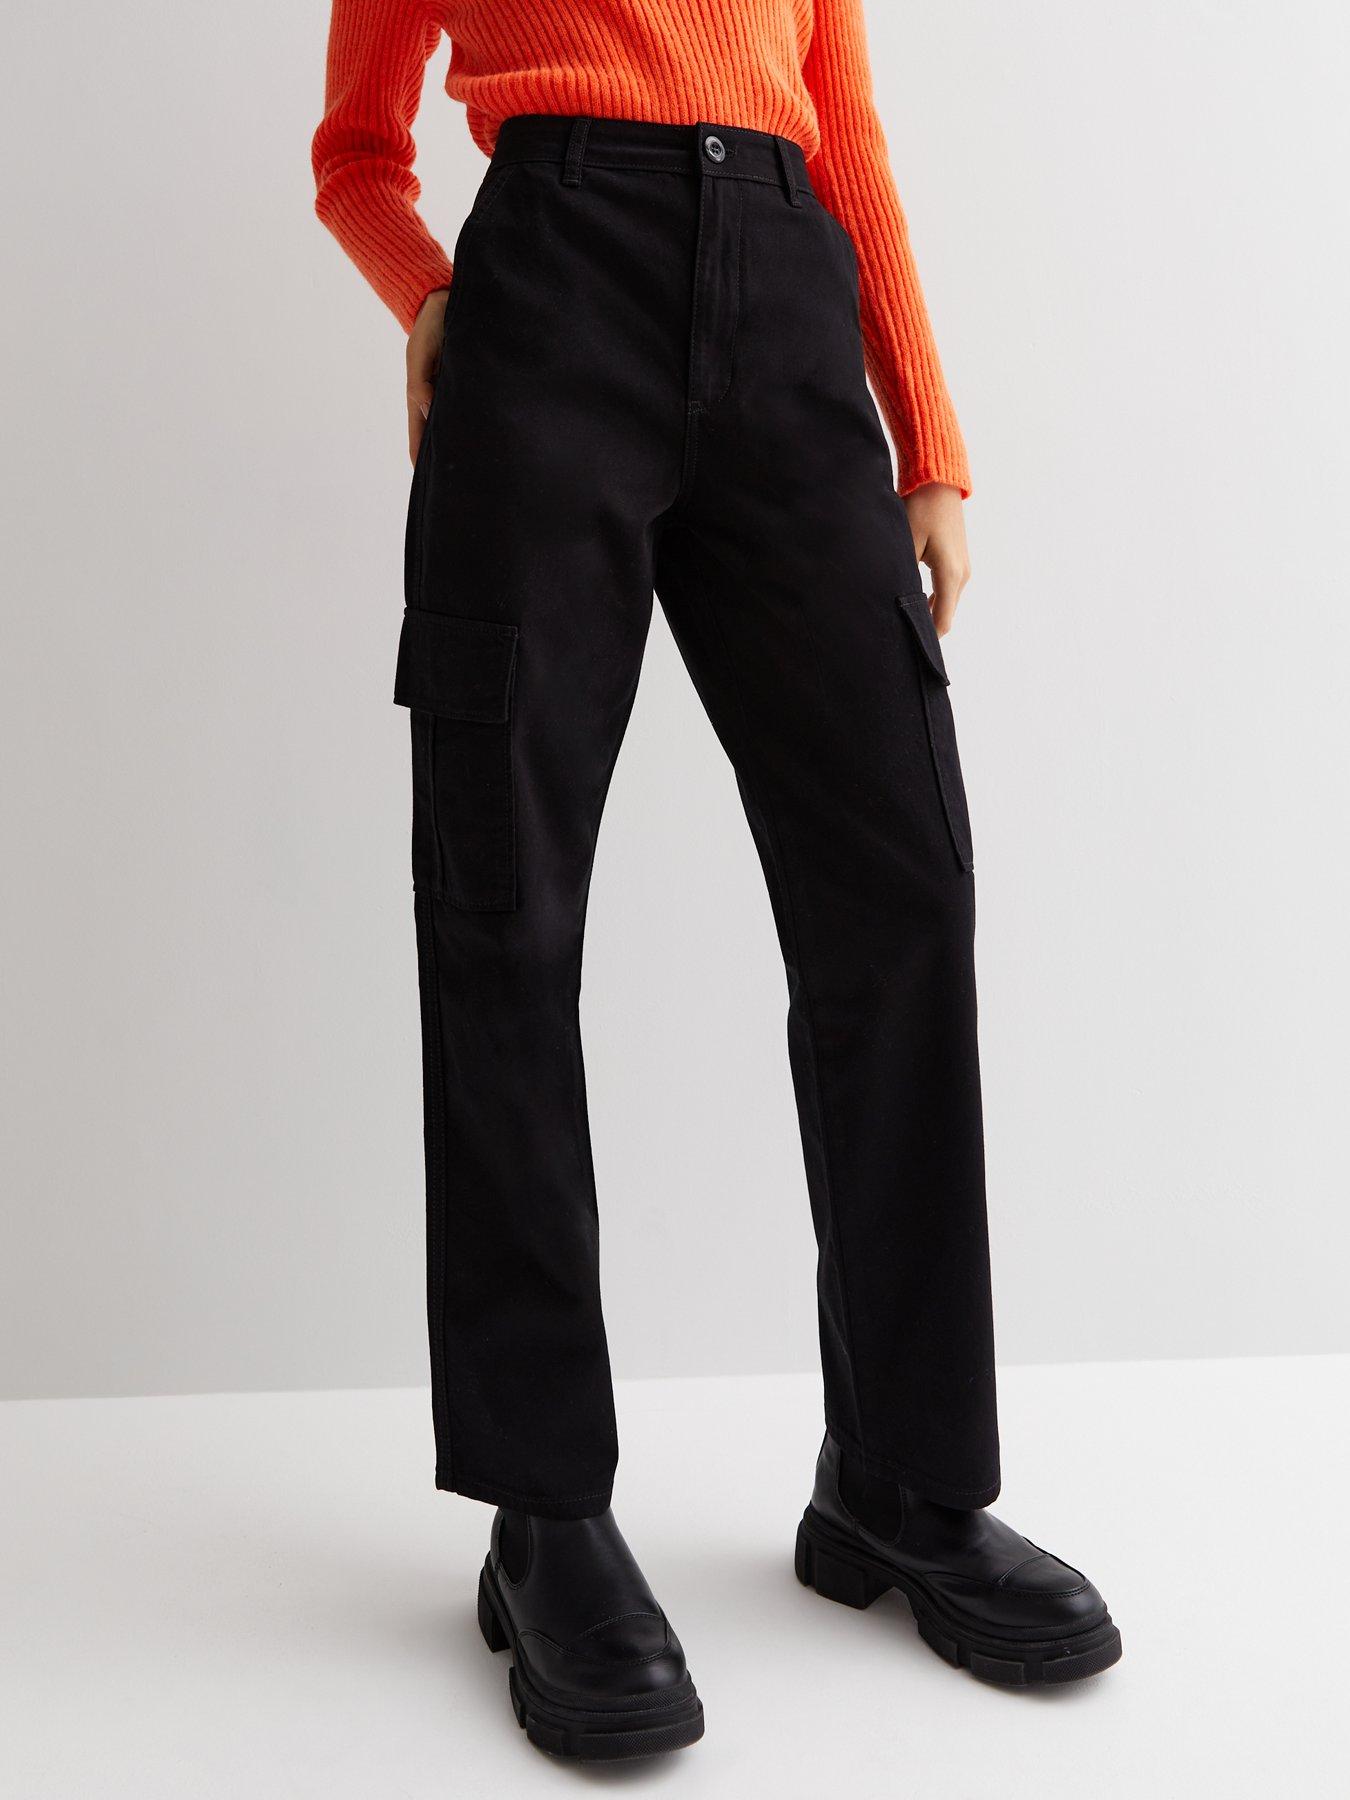 discount 51% WOMEN FASHION Trousers Cargo trousers Print Black S NoName Cargo trousers 